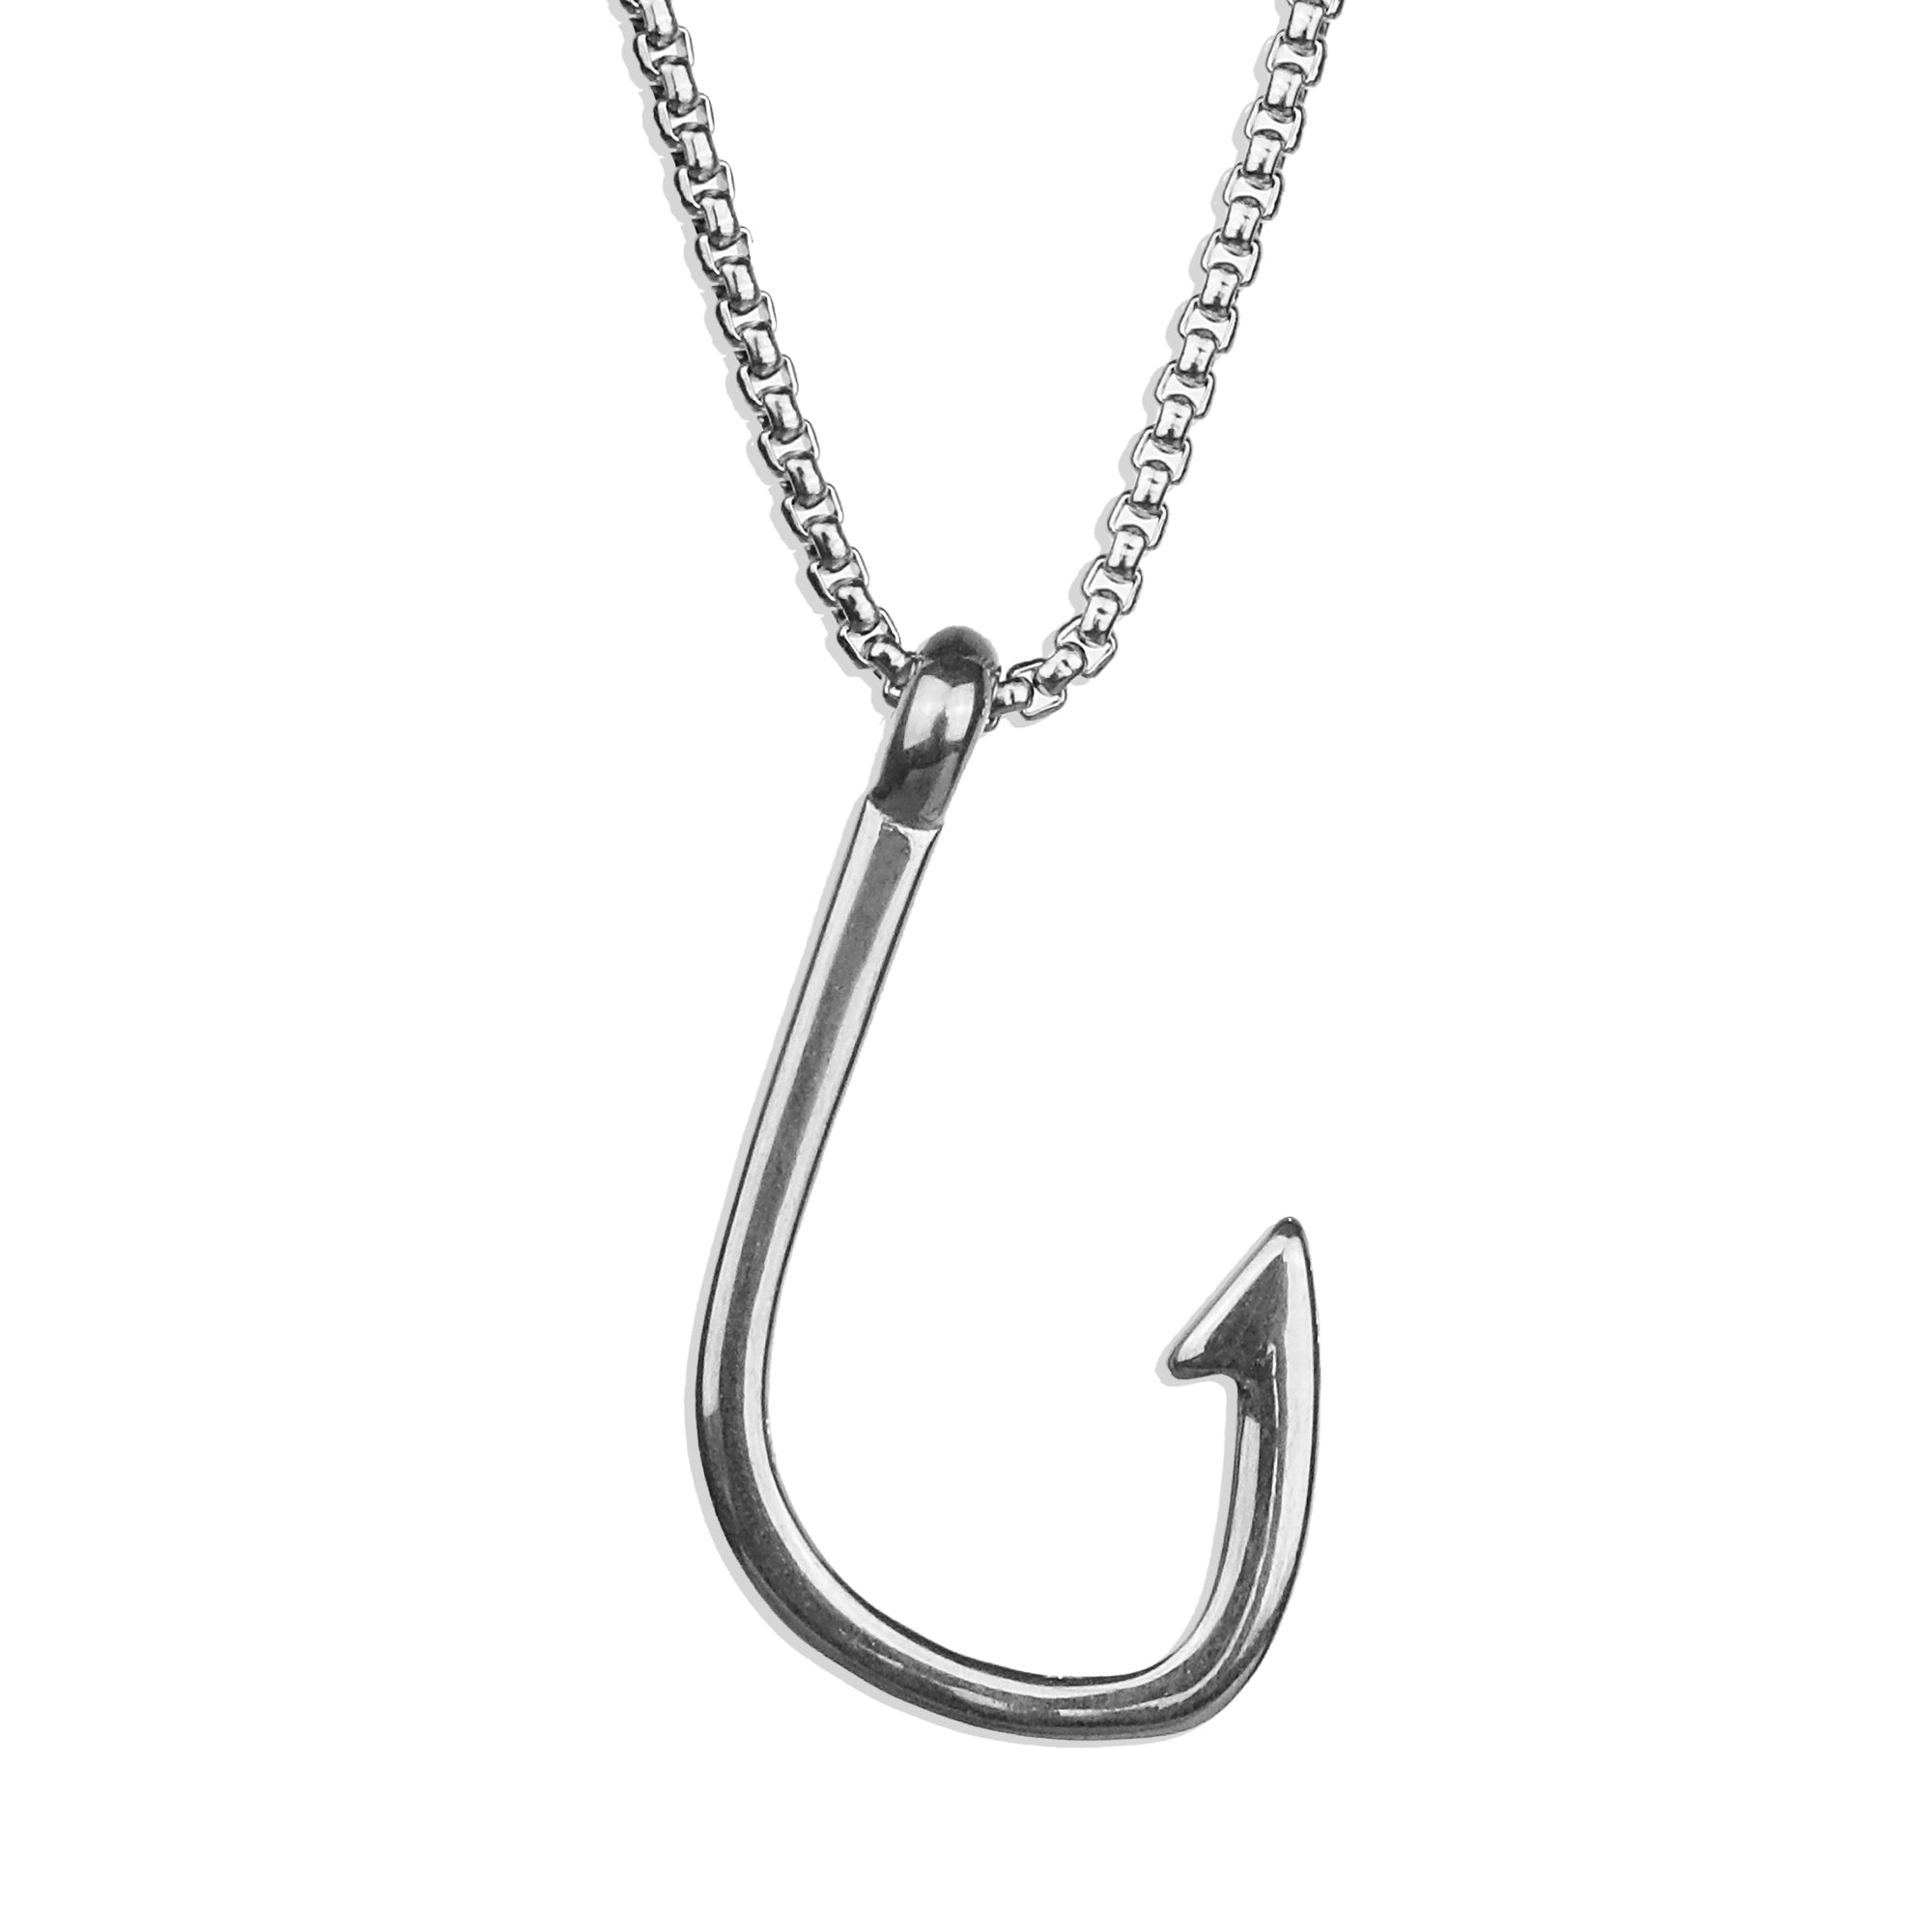 Hook Necklace - Silver